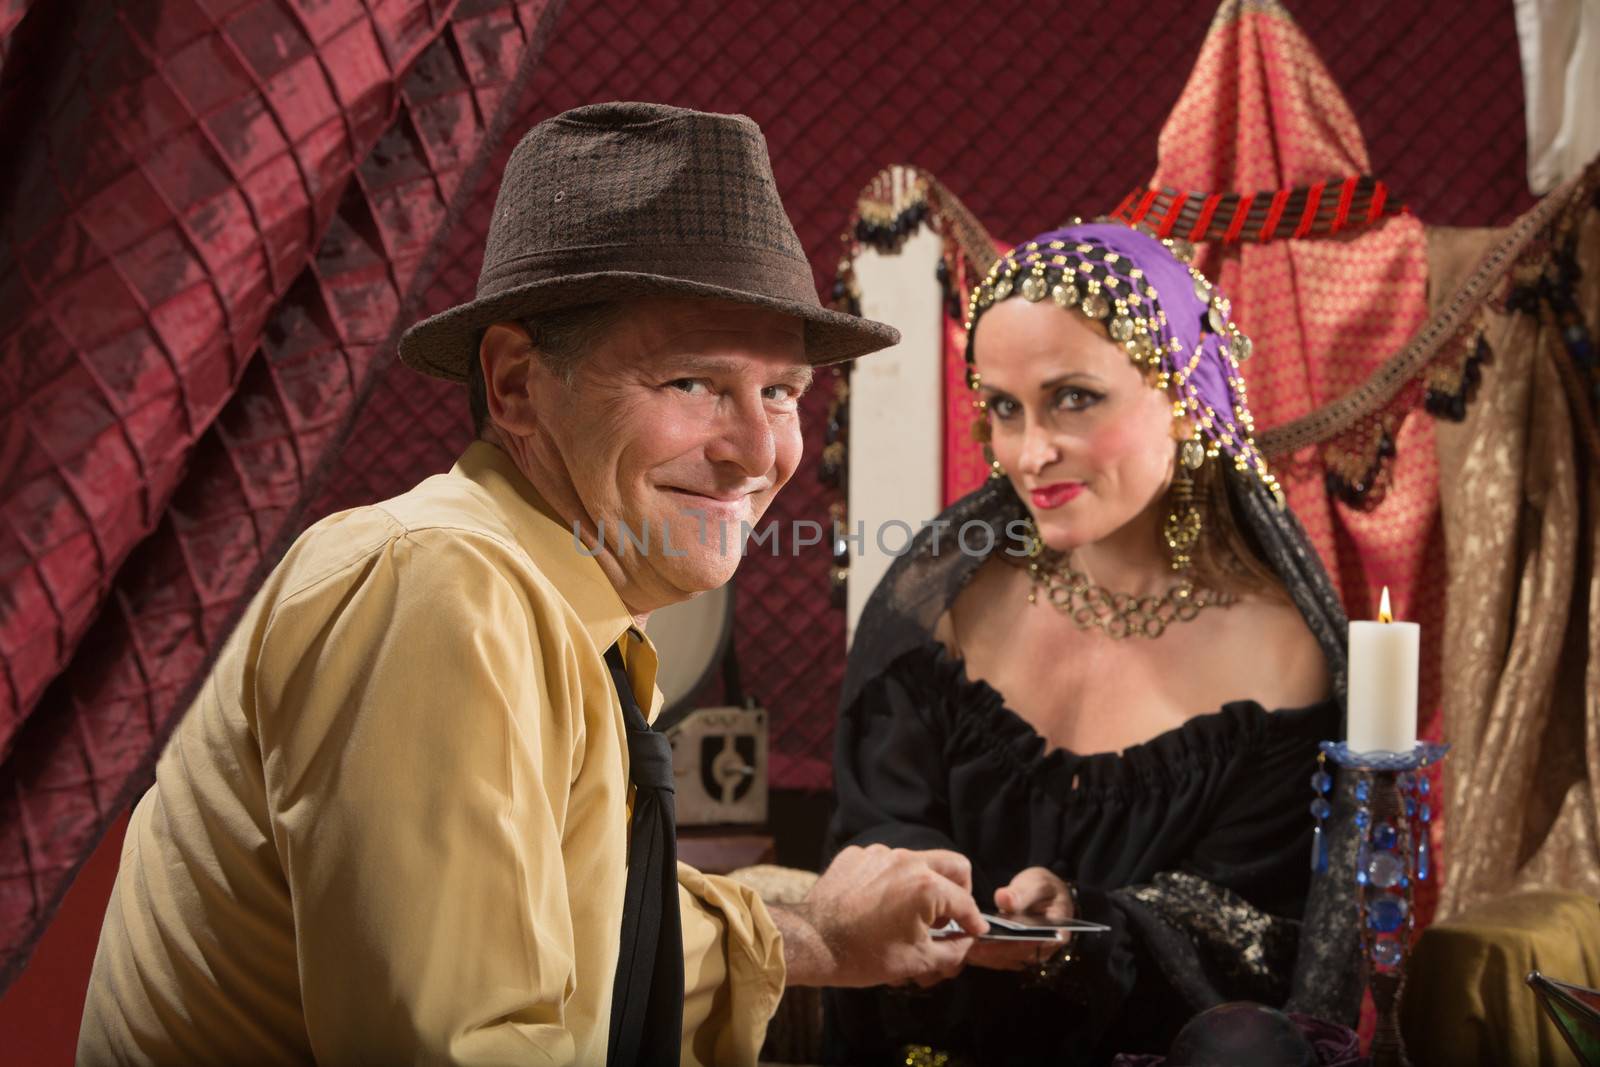 Lucky businessman taking tarot card from fortune teller